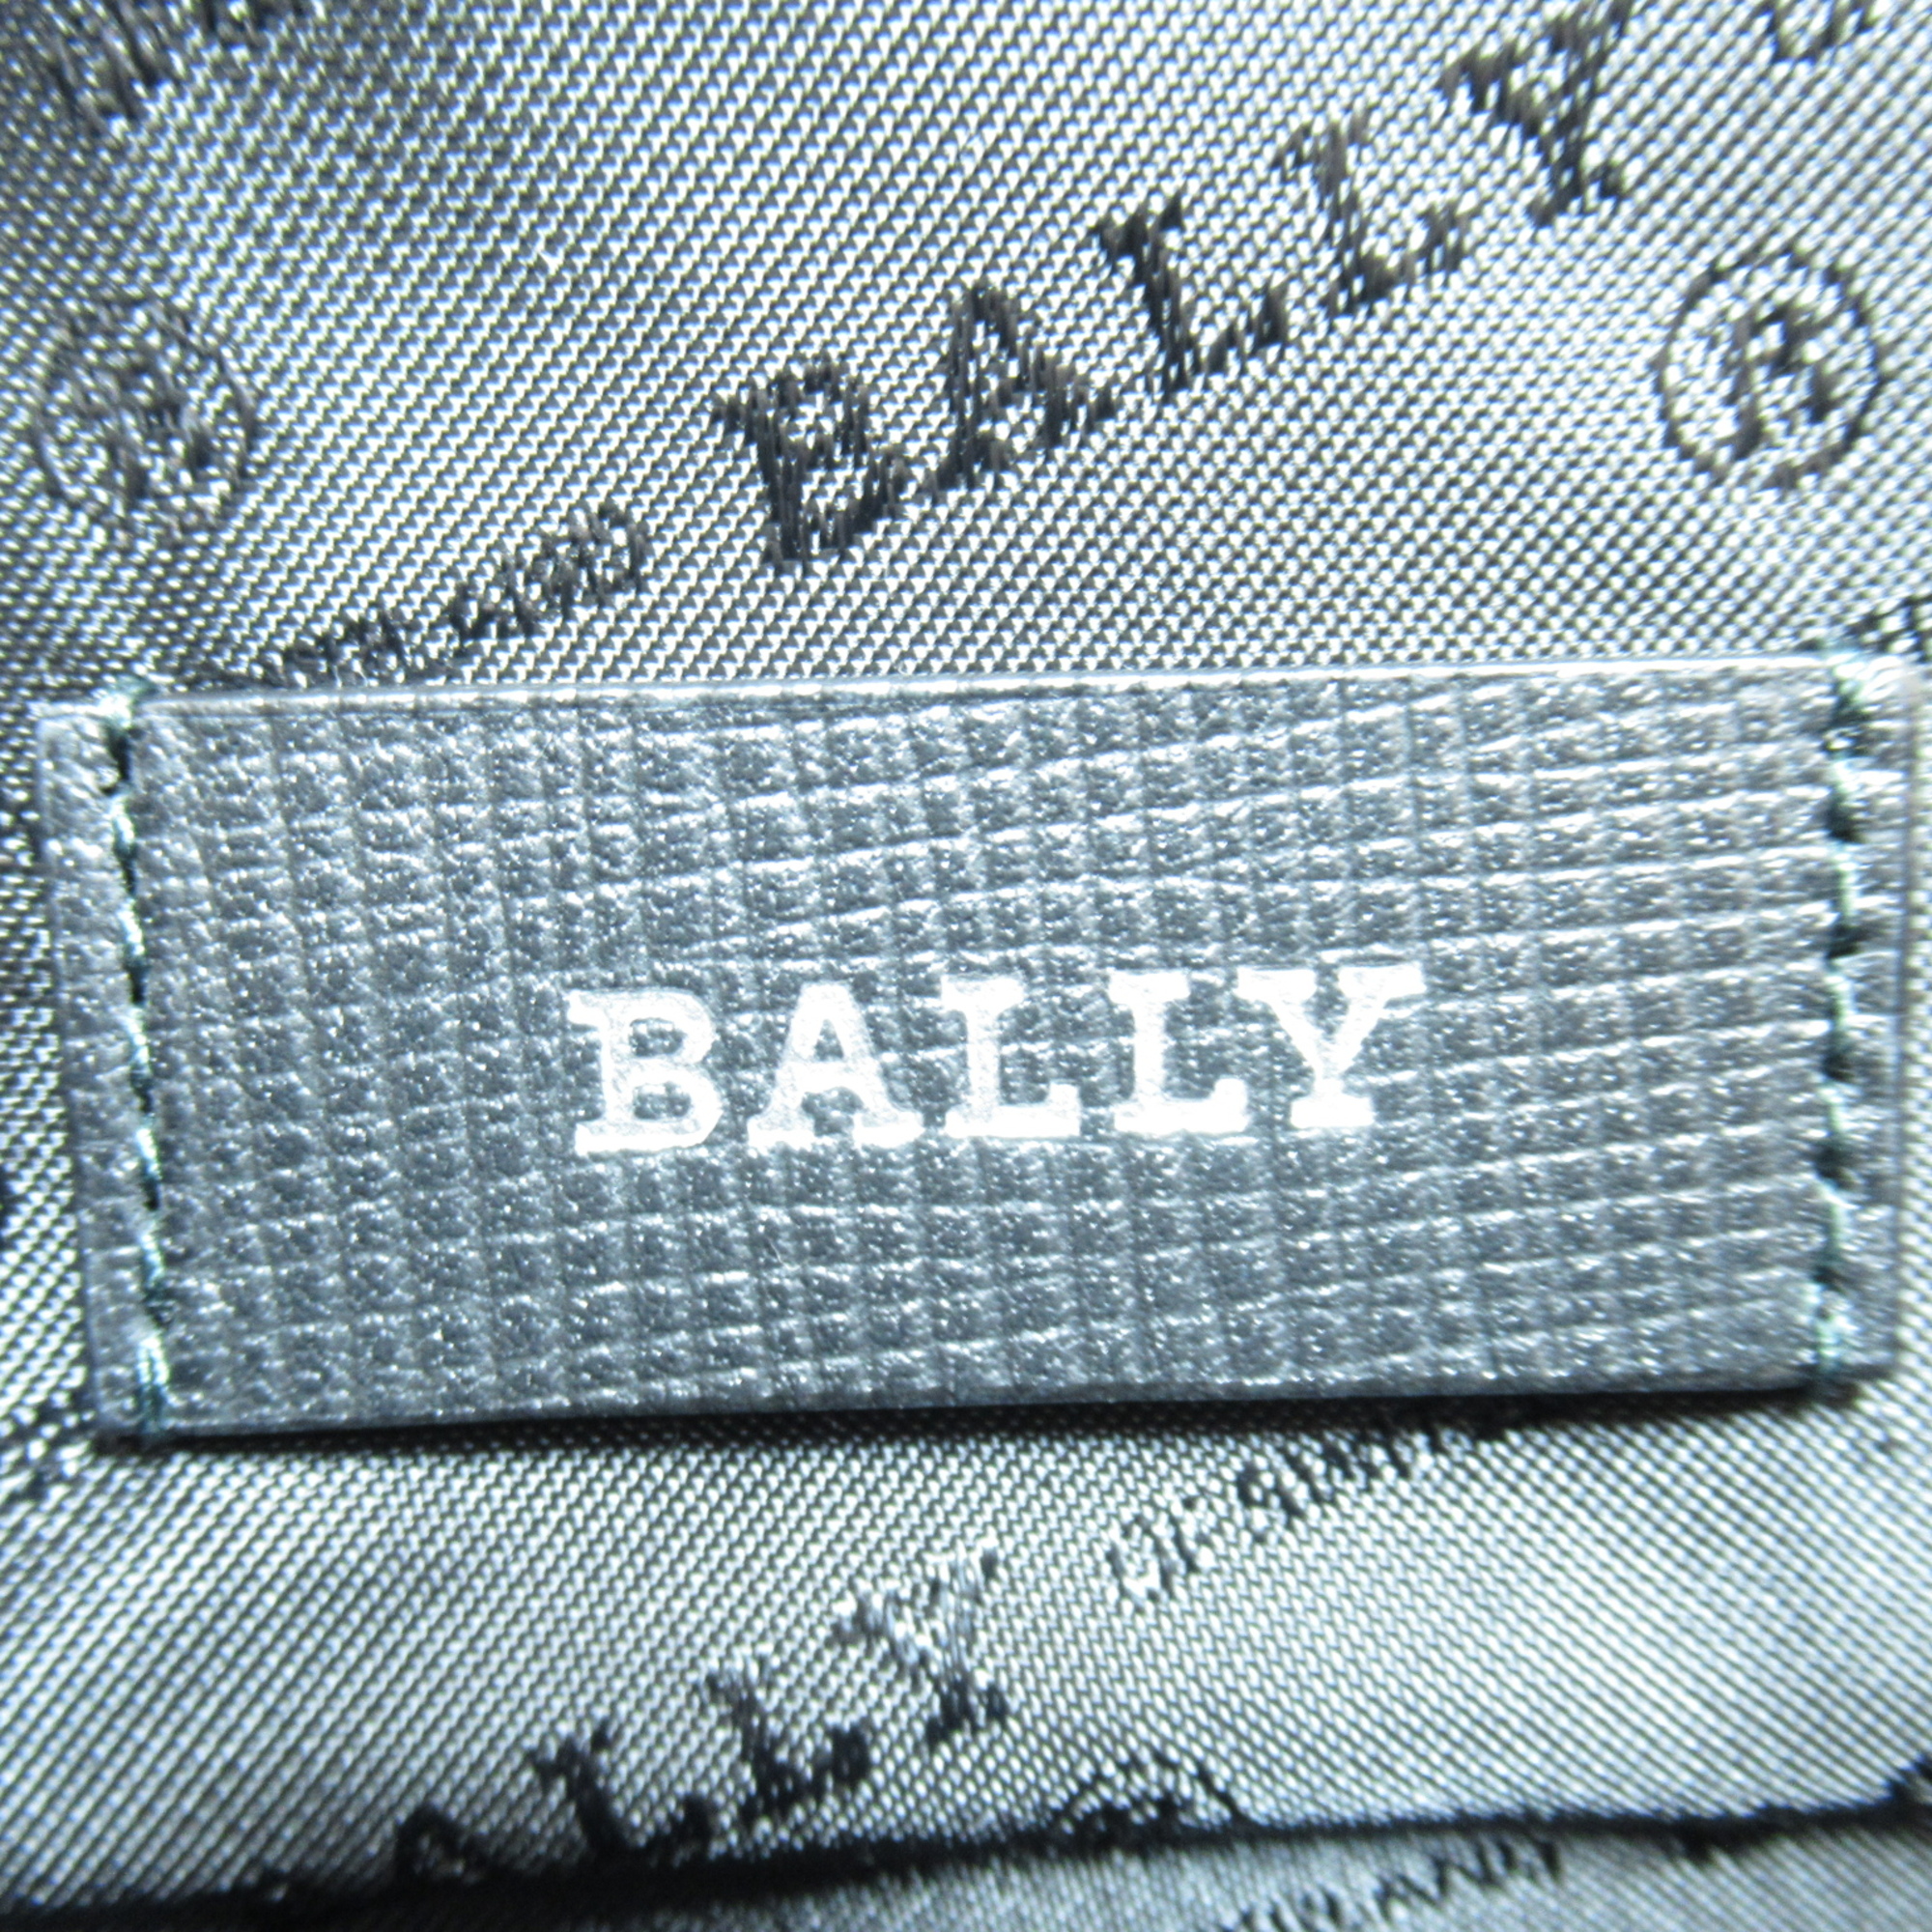 BALLY Business bag Black Nylon 6236759